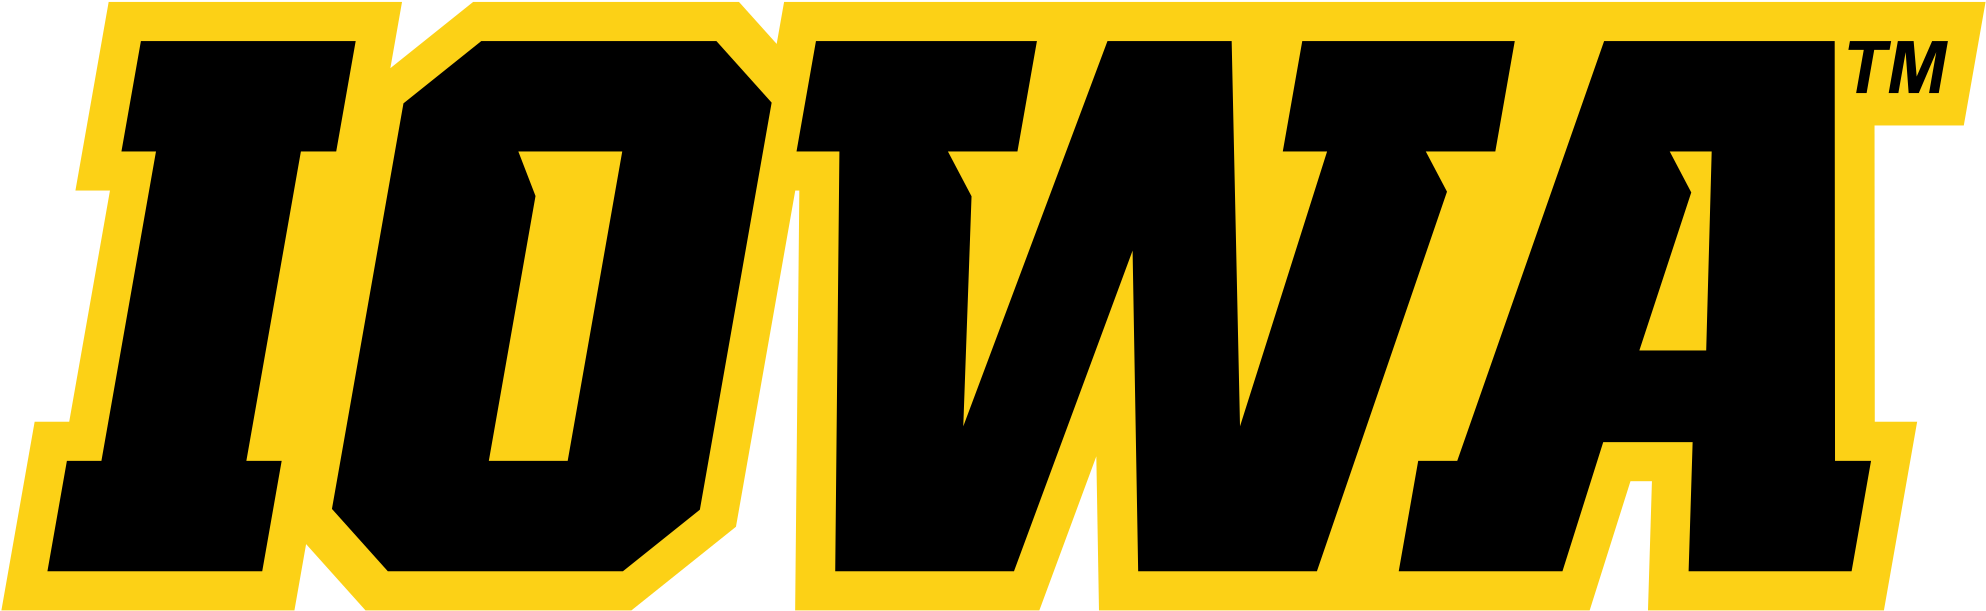 Iowa Hawkeyes Wordmark - Iowa Hawkeyes Transparent Logo (1280x401), Png Download